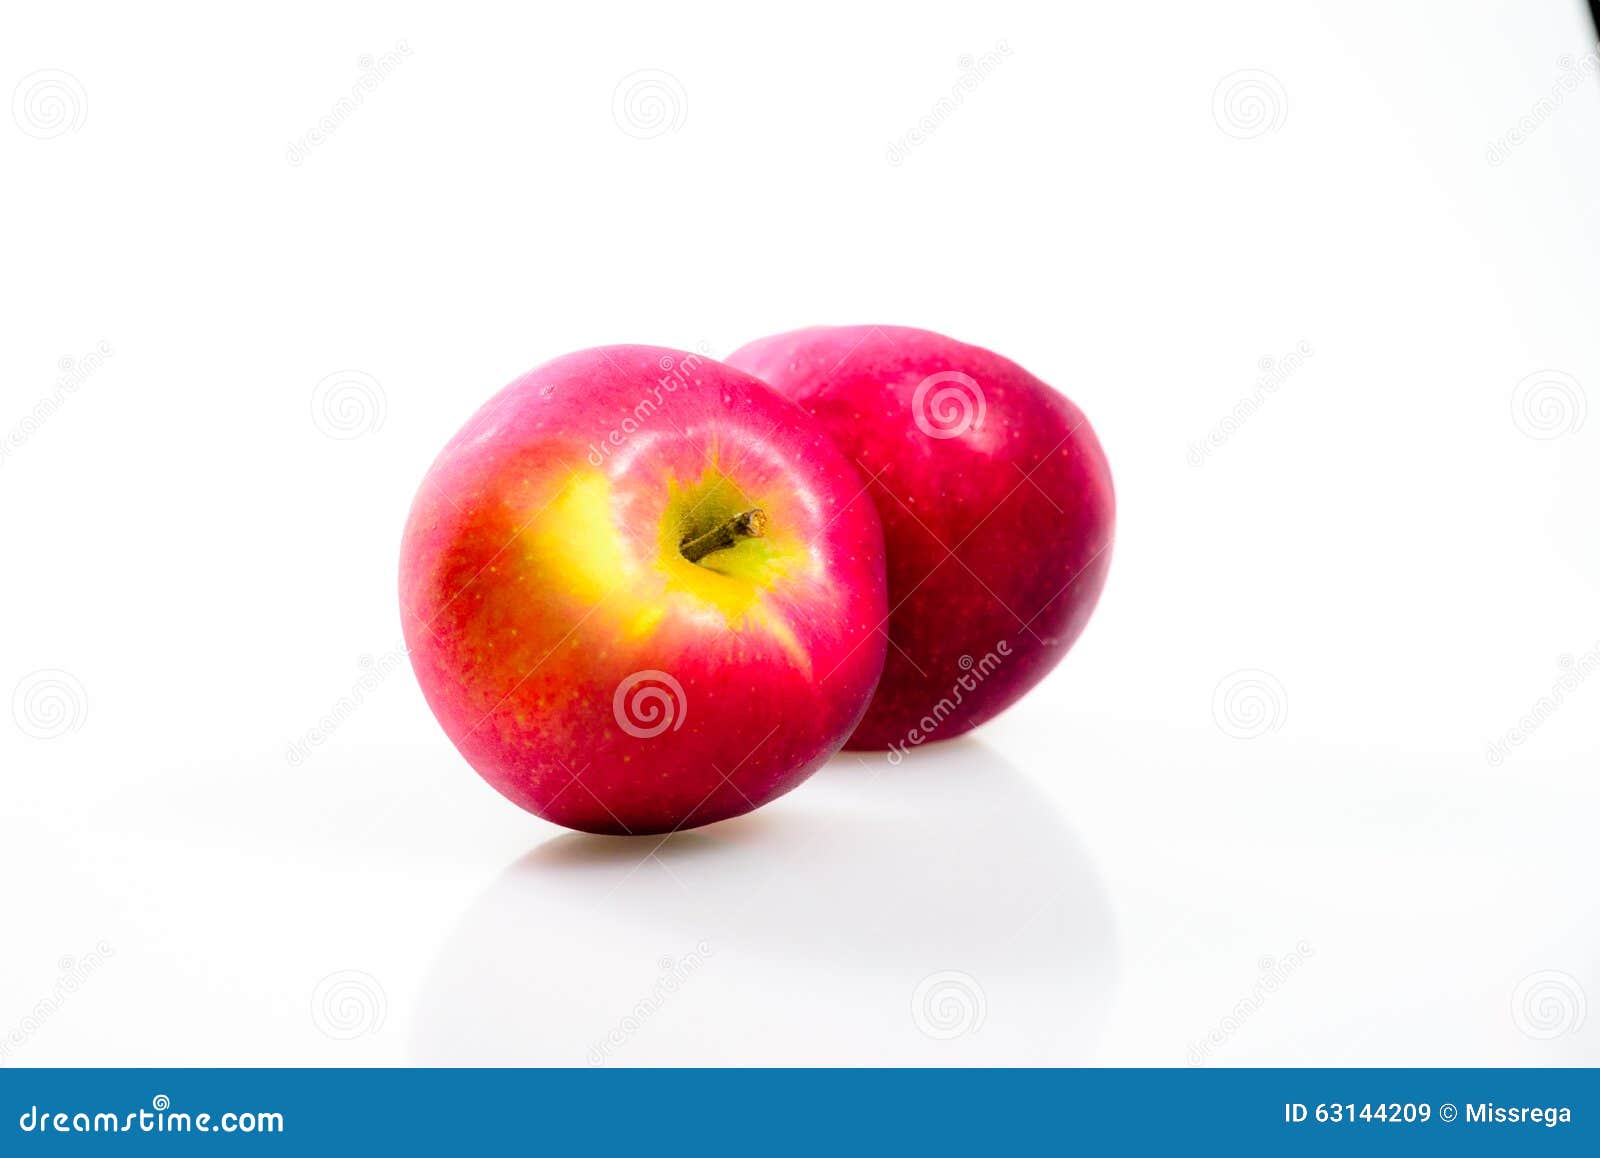 macintosh apple on the white background